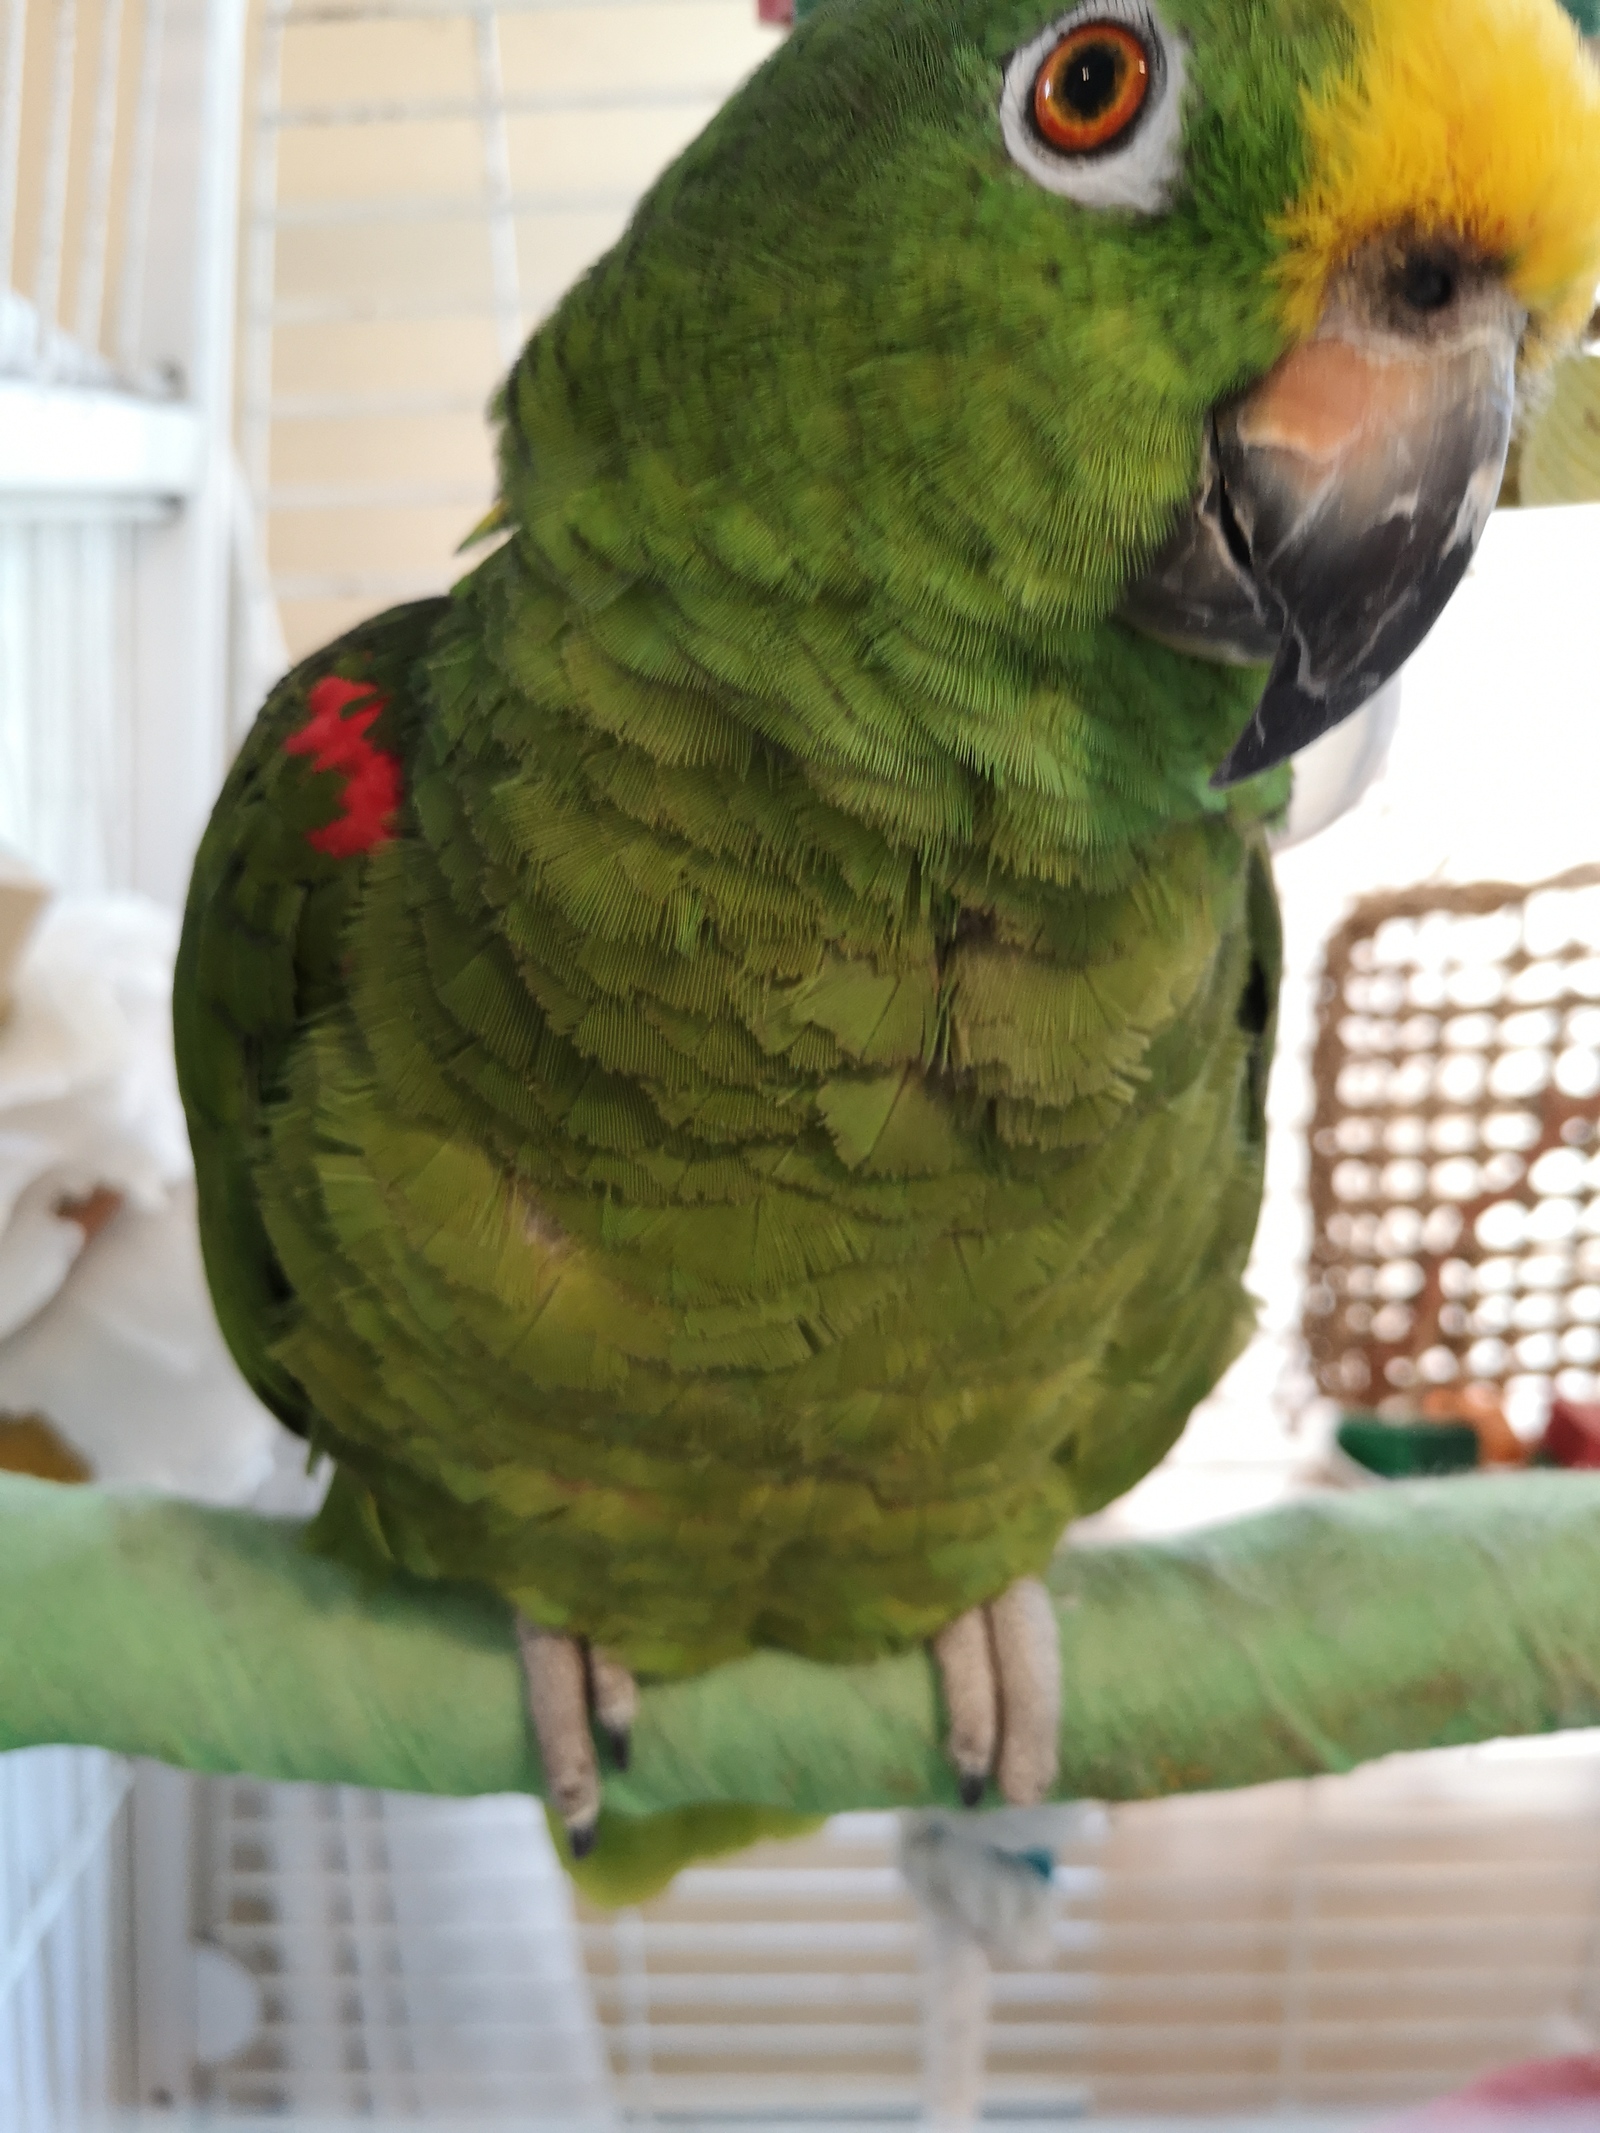 Parrots! - My, Birds, A parrot, Macaw parrots, Amazon, Pyrrura, Shelter, Longpost